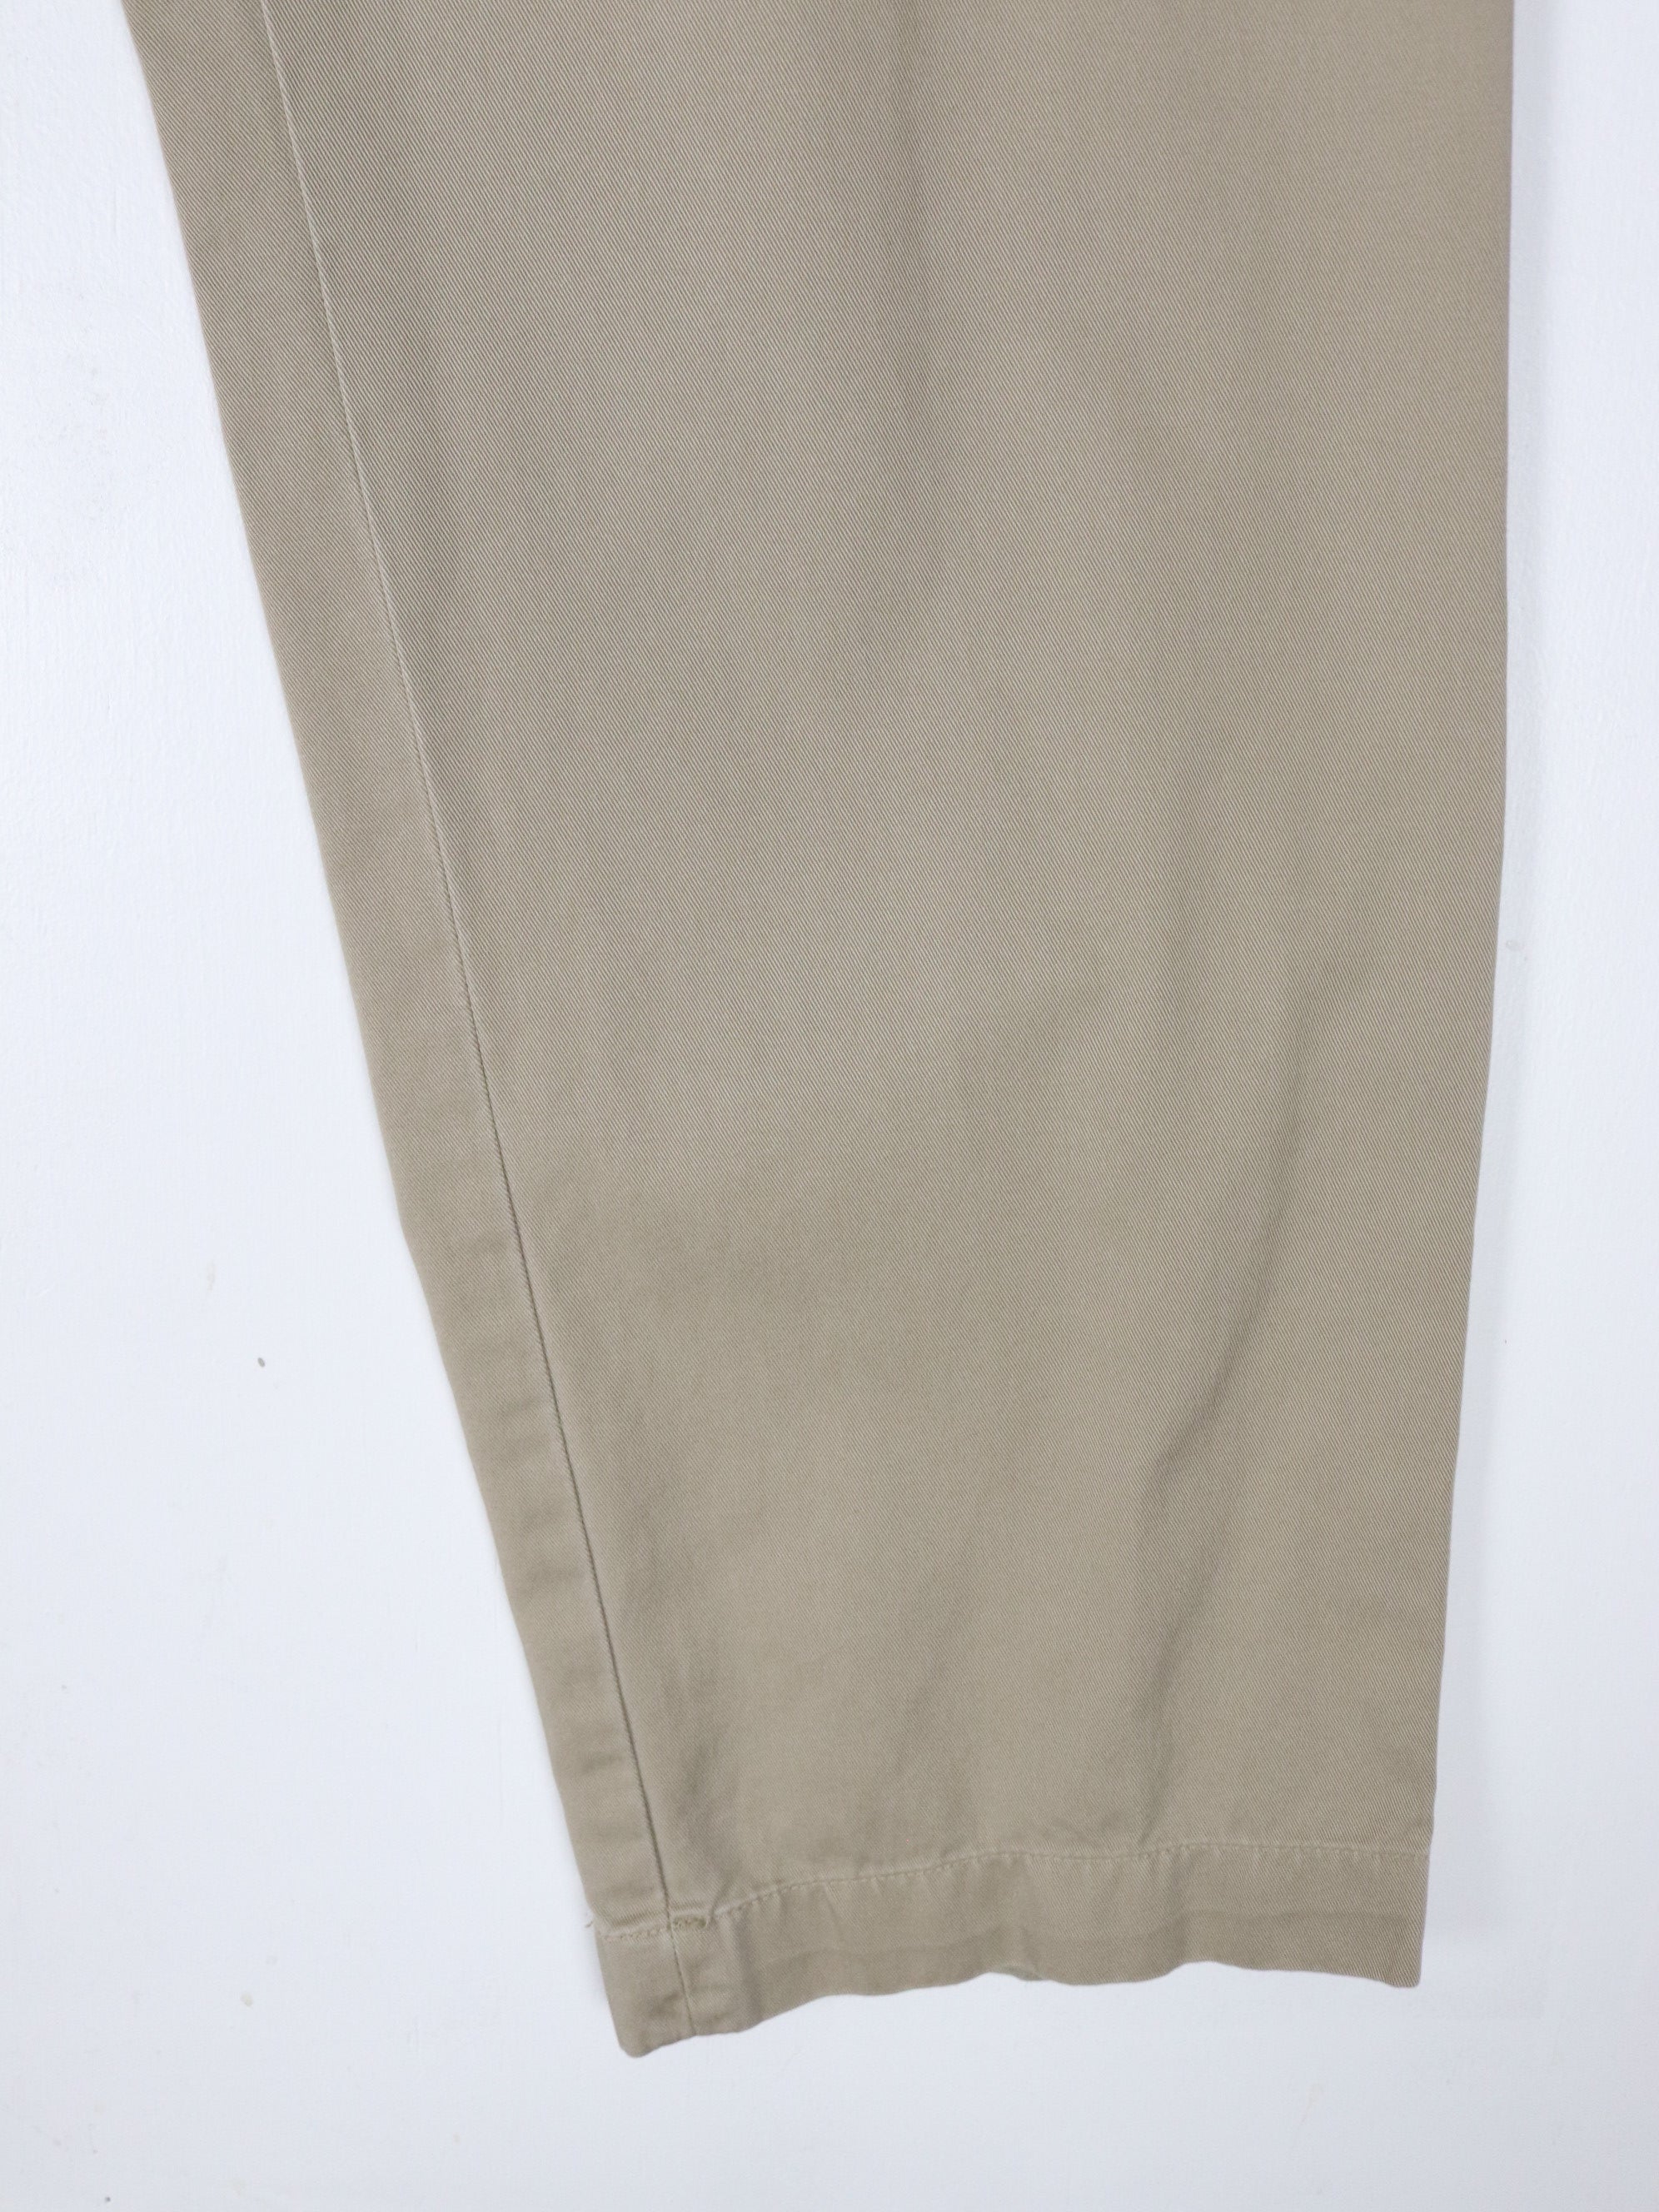 Vintage Polo Ralph Lauren Pants Fits Mens 31 x 31 Beige Chino